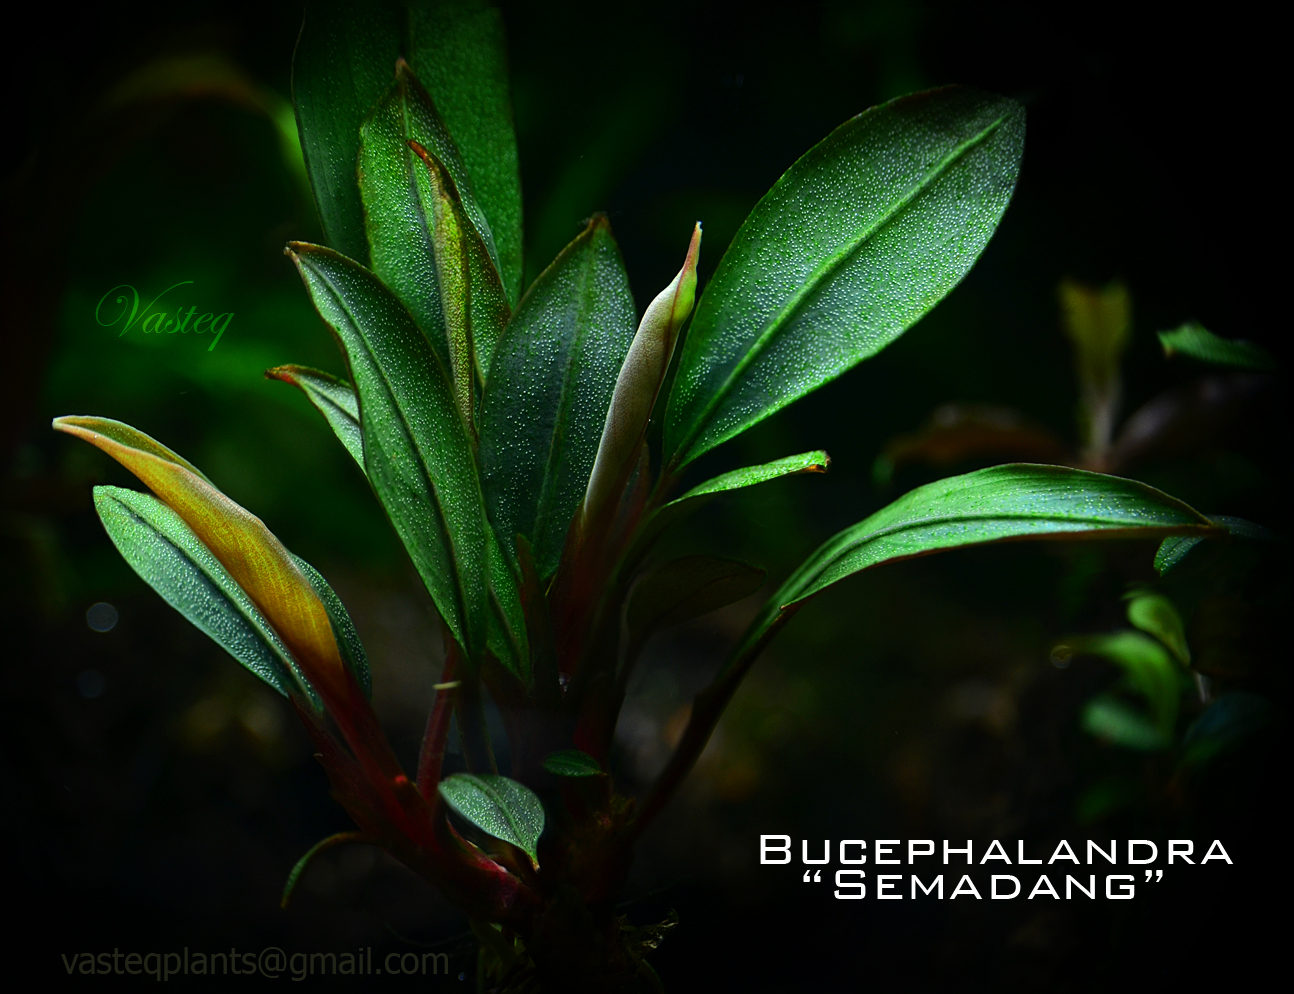 Bucephalandra 'Semadang'